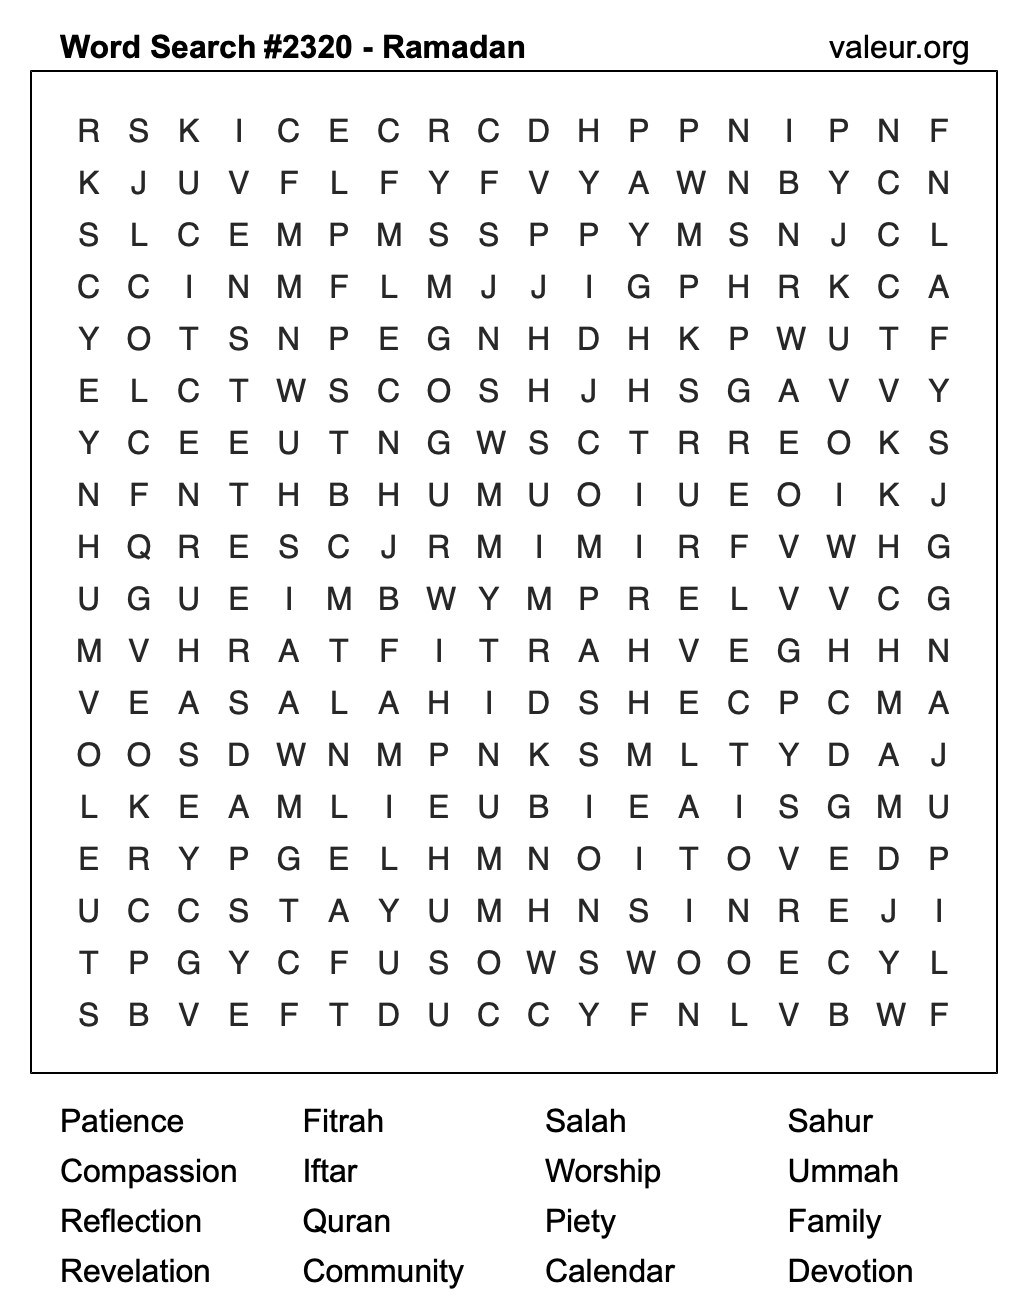 Ramadan Word Search Puzzle #2320